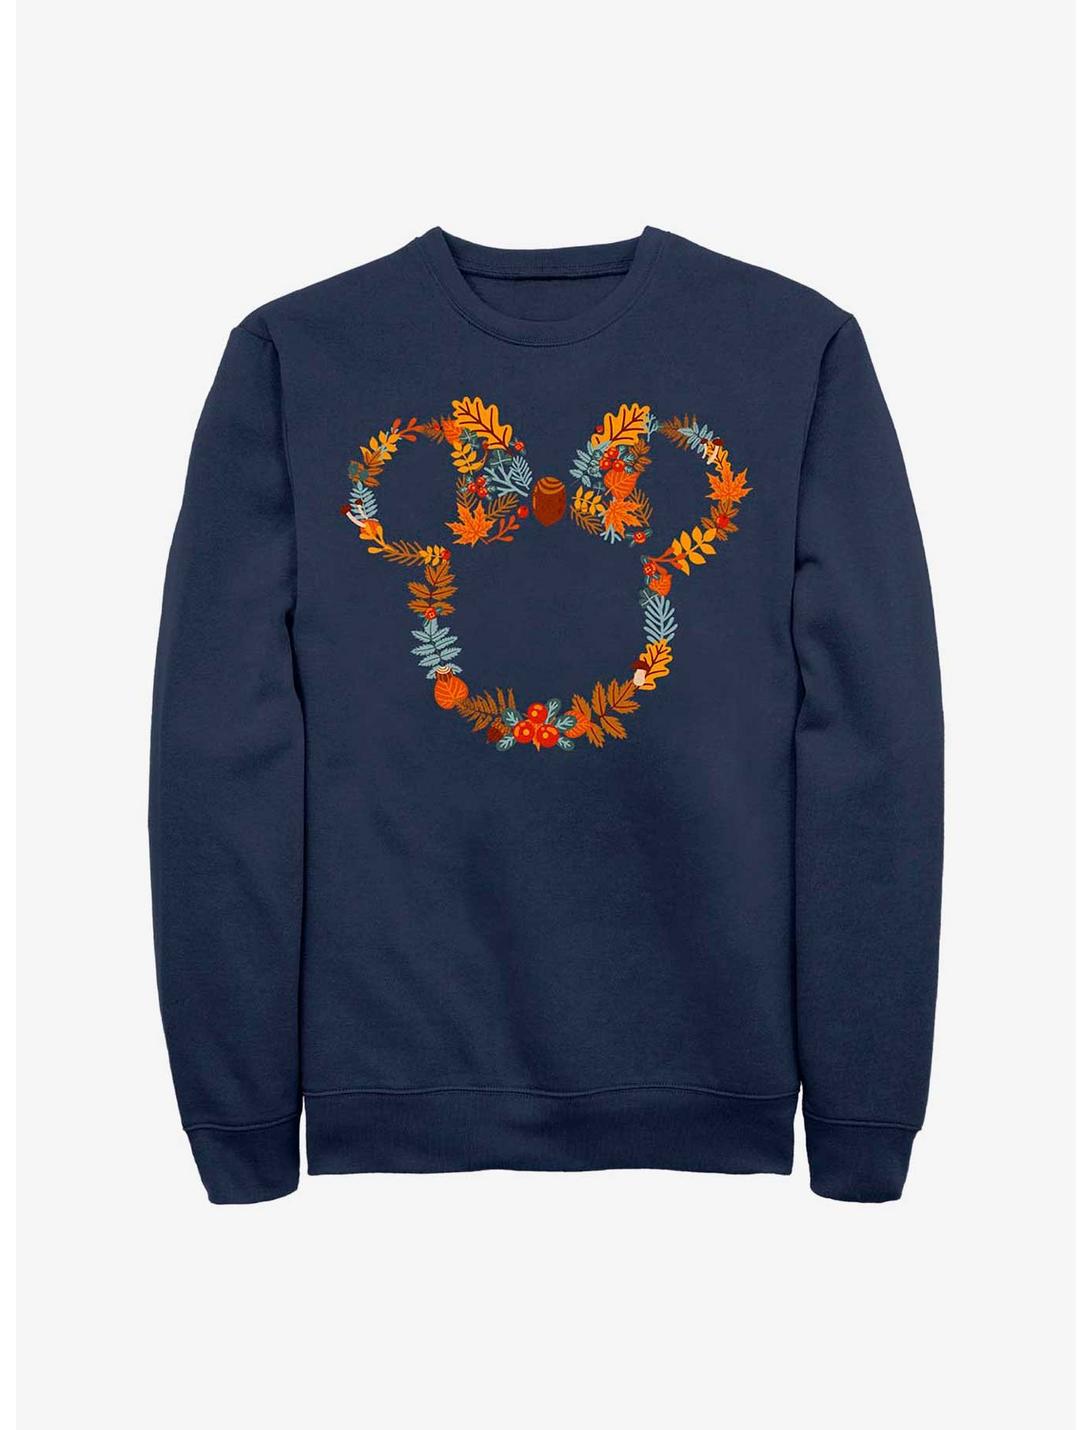 Disney Minnie Mouse Autumn Wreath Sweatshirt, NAVY, hi-res